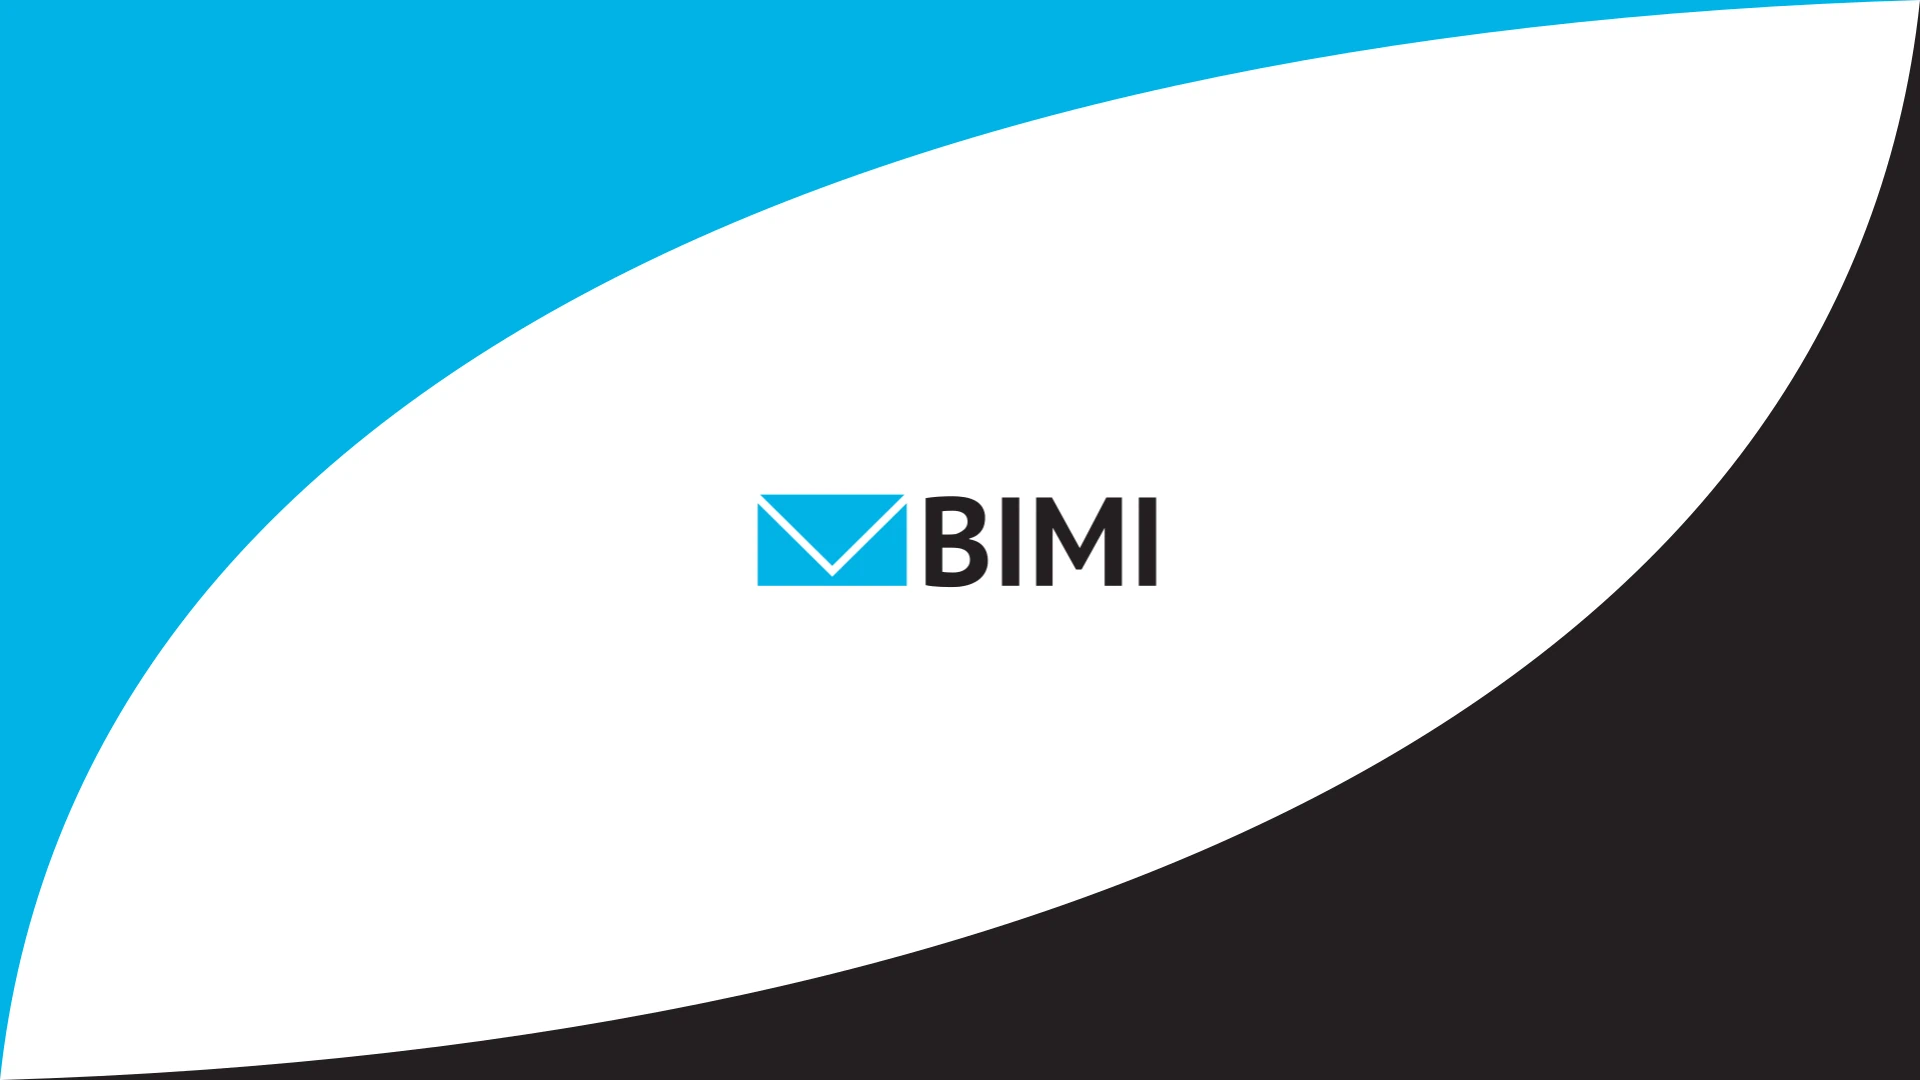 Details to consider when creating BIMI logos.